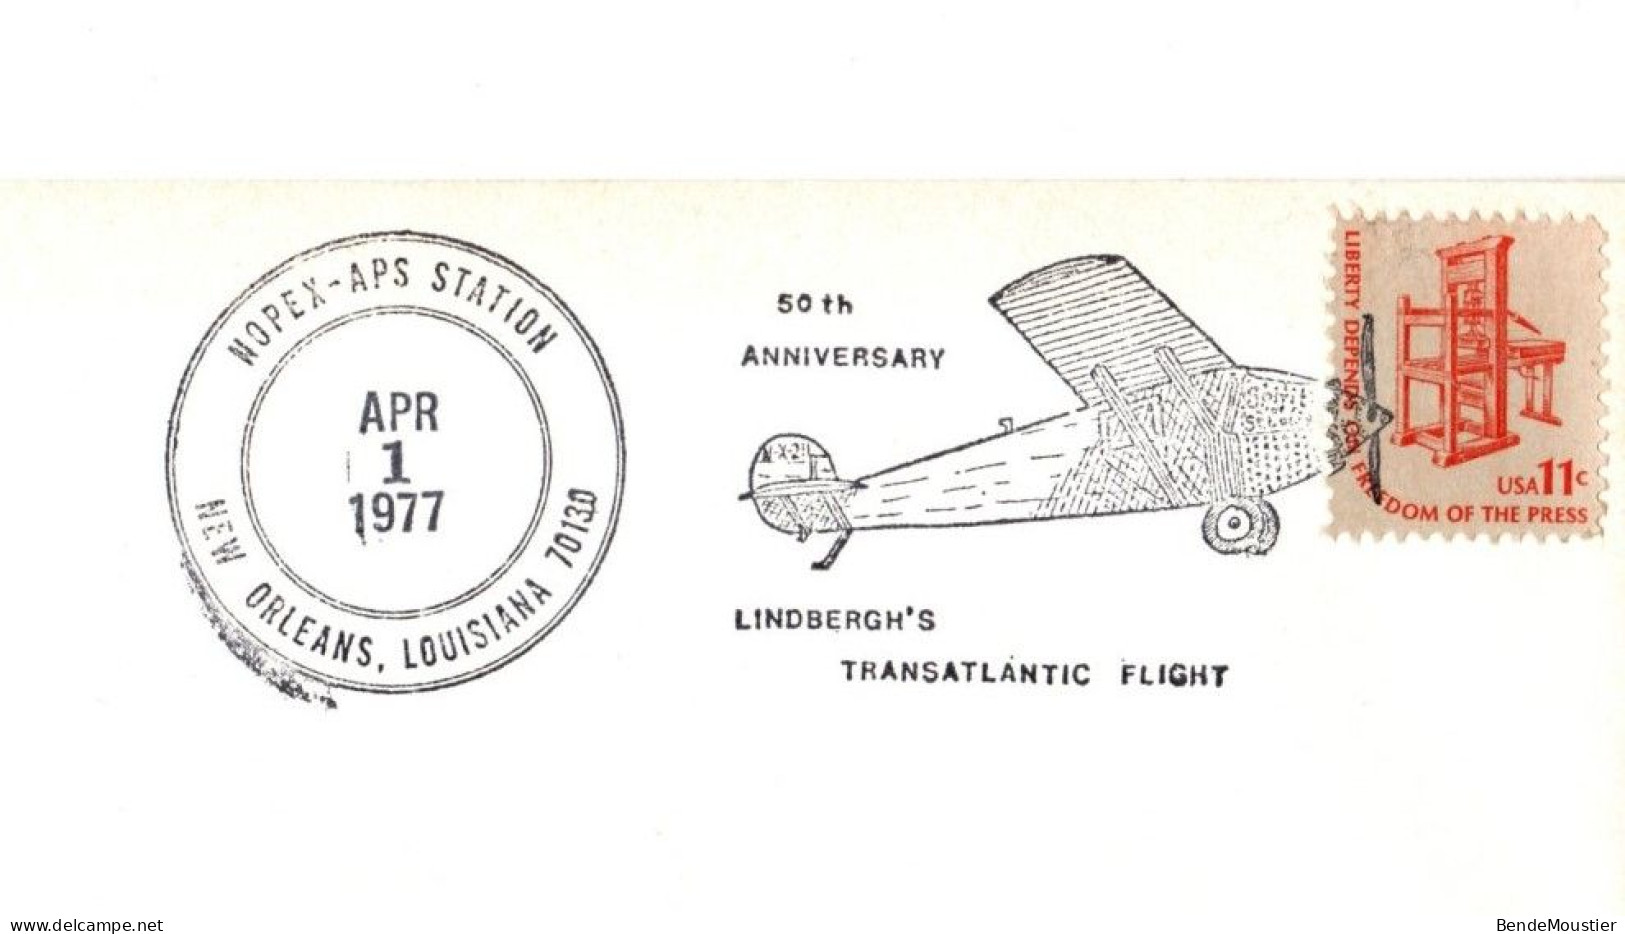 (R19e) USA - Hopex - APS Station - Lindbergh's Transatlantic Flight - 50 Th Anniversary - New Orleans - Louisiana  1977. - 3c. 1961-... Cartas & Documentos